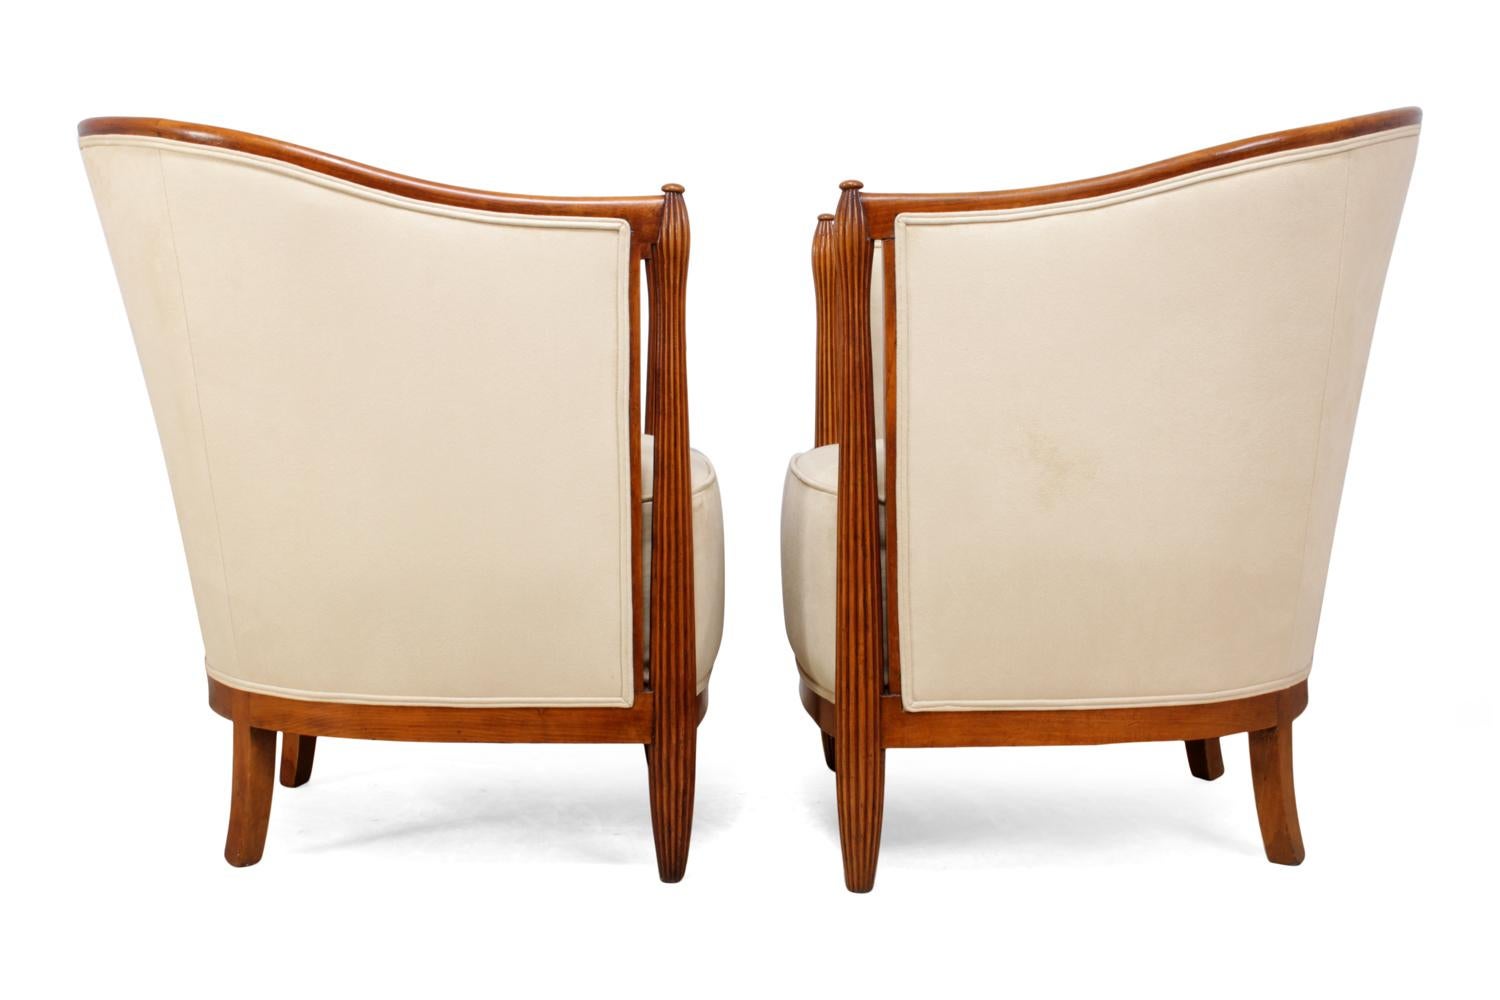 Beech Pair of French Art Deco Salon Chairs by Paul Folllot, circa 1925